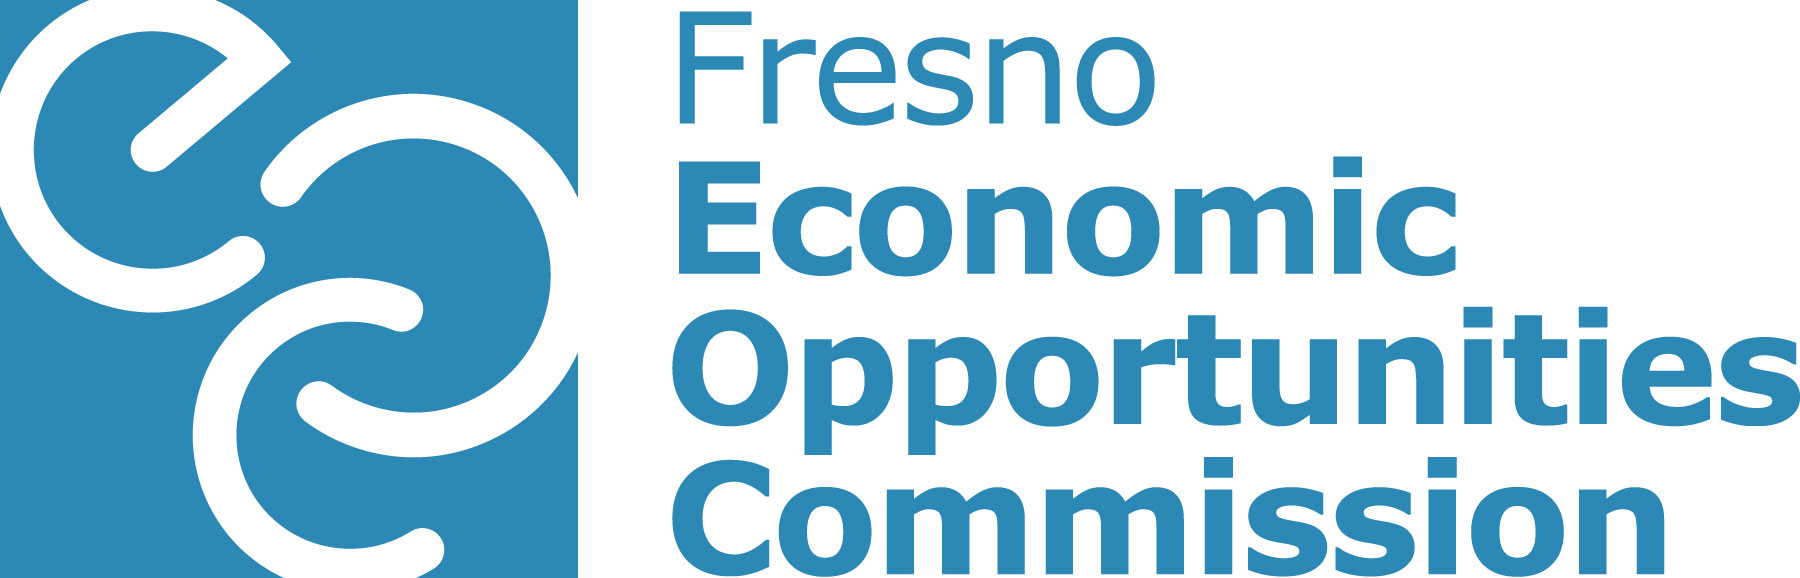 Fresno County Economic Opportunities Commission logo